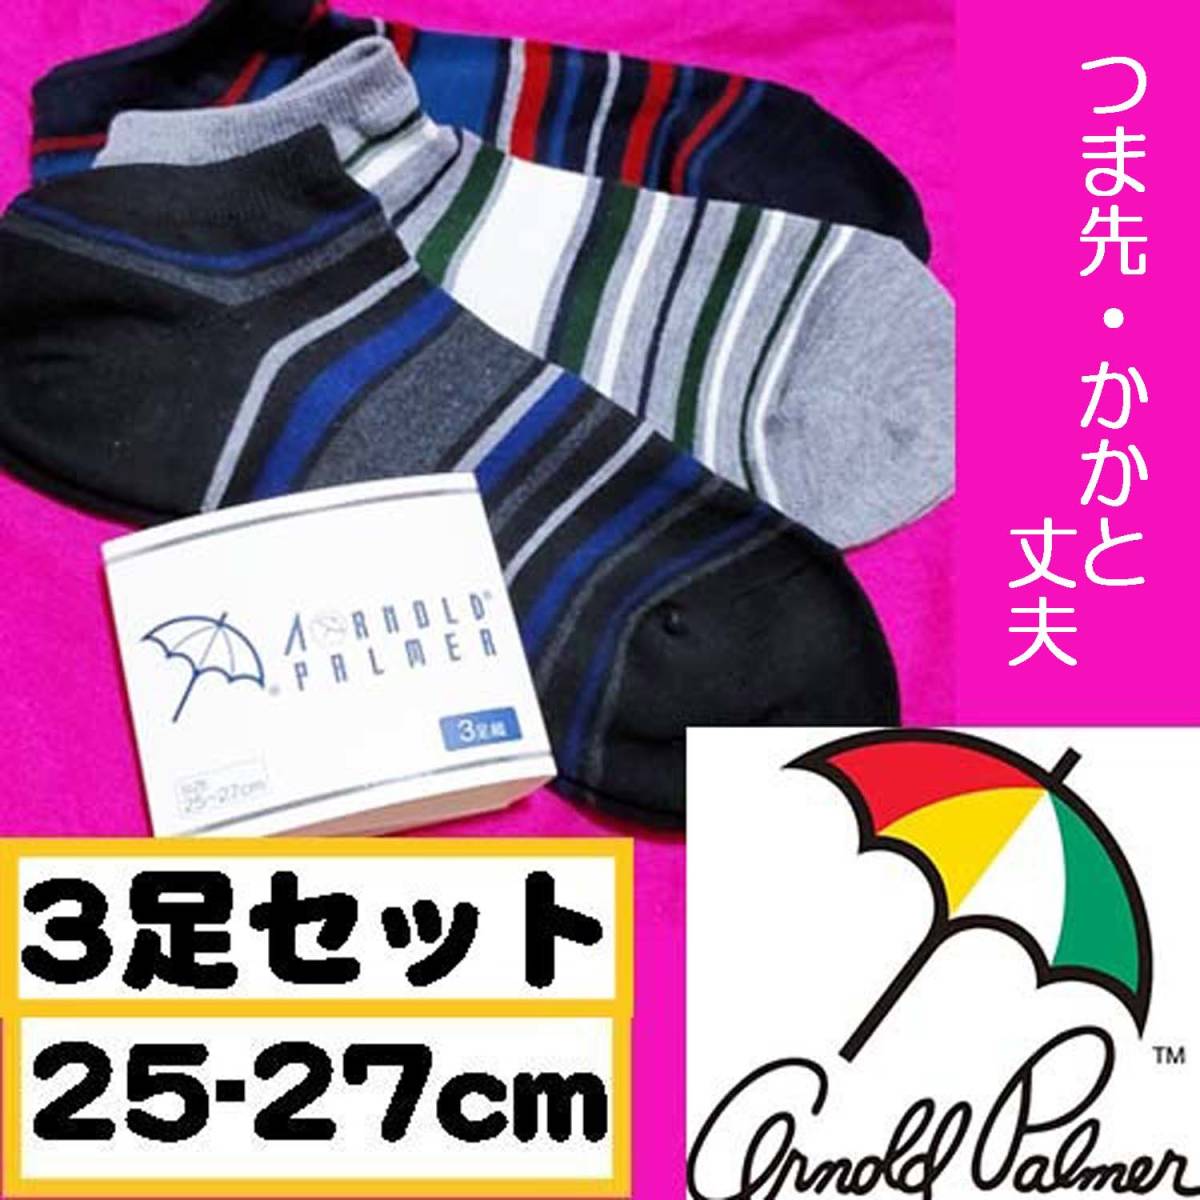 [25-27cm] Arnold Palmer toes / heel robust socks 3 pairs set Arnold Palmer Logo 